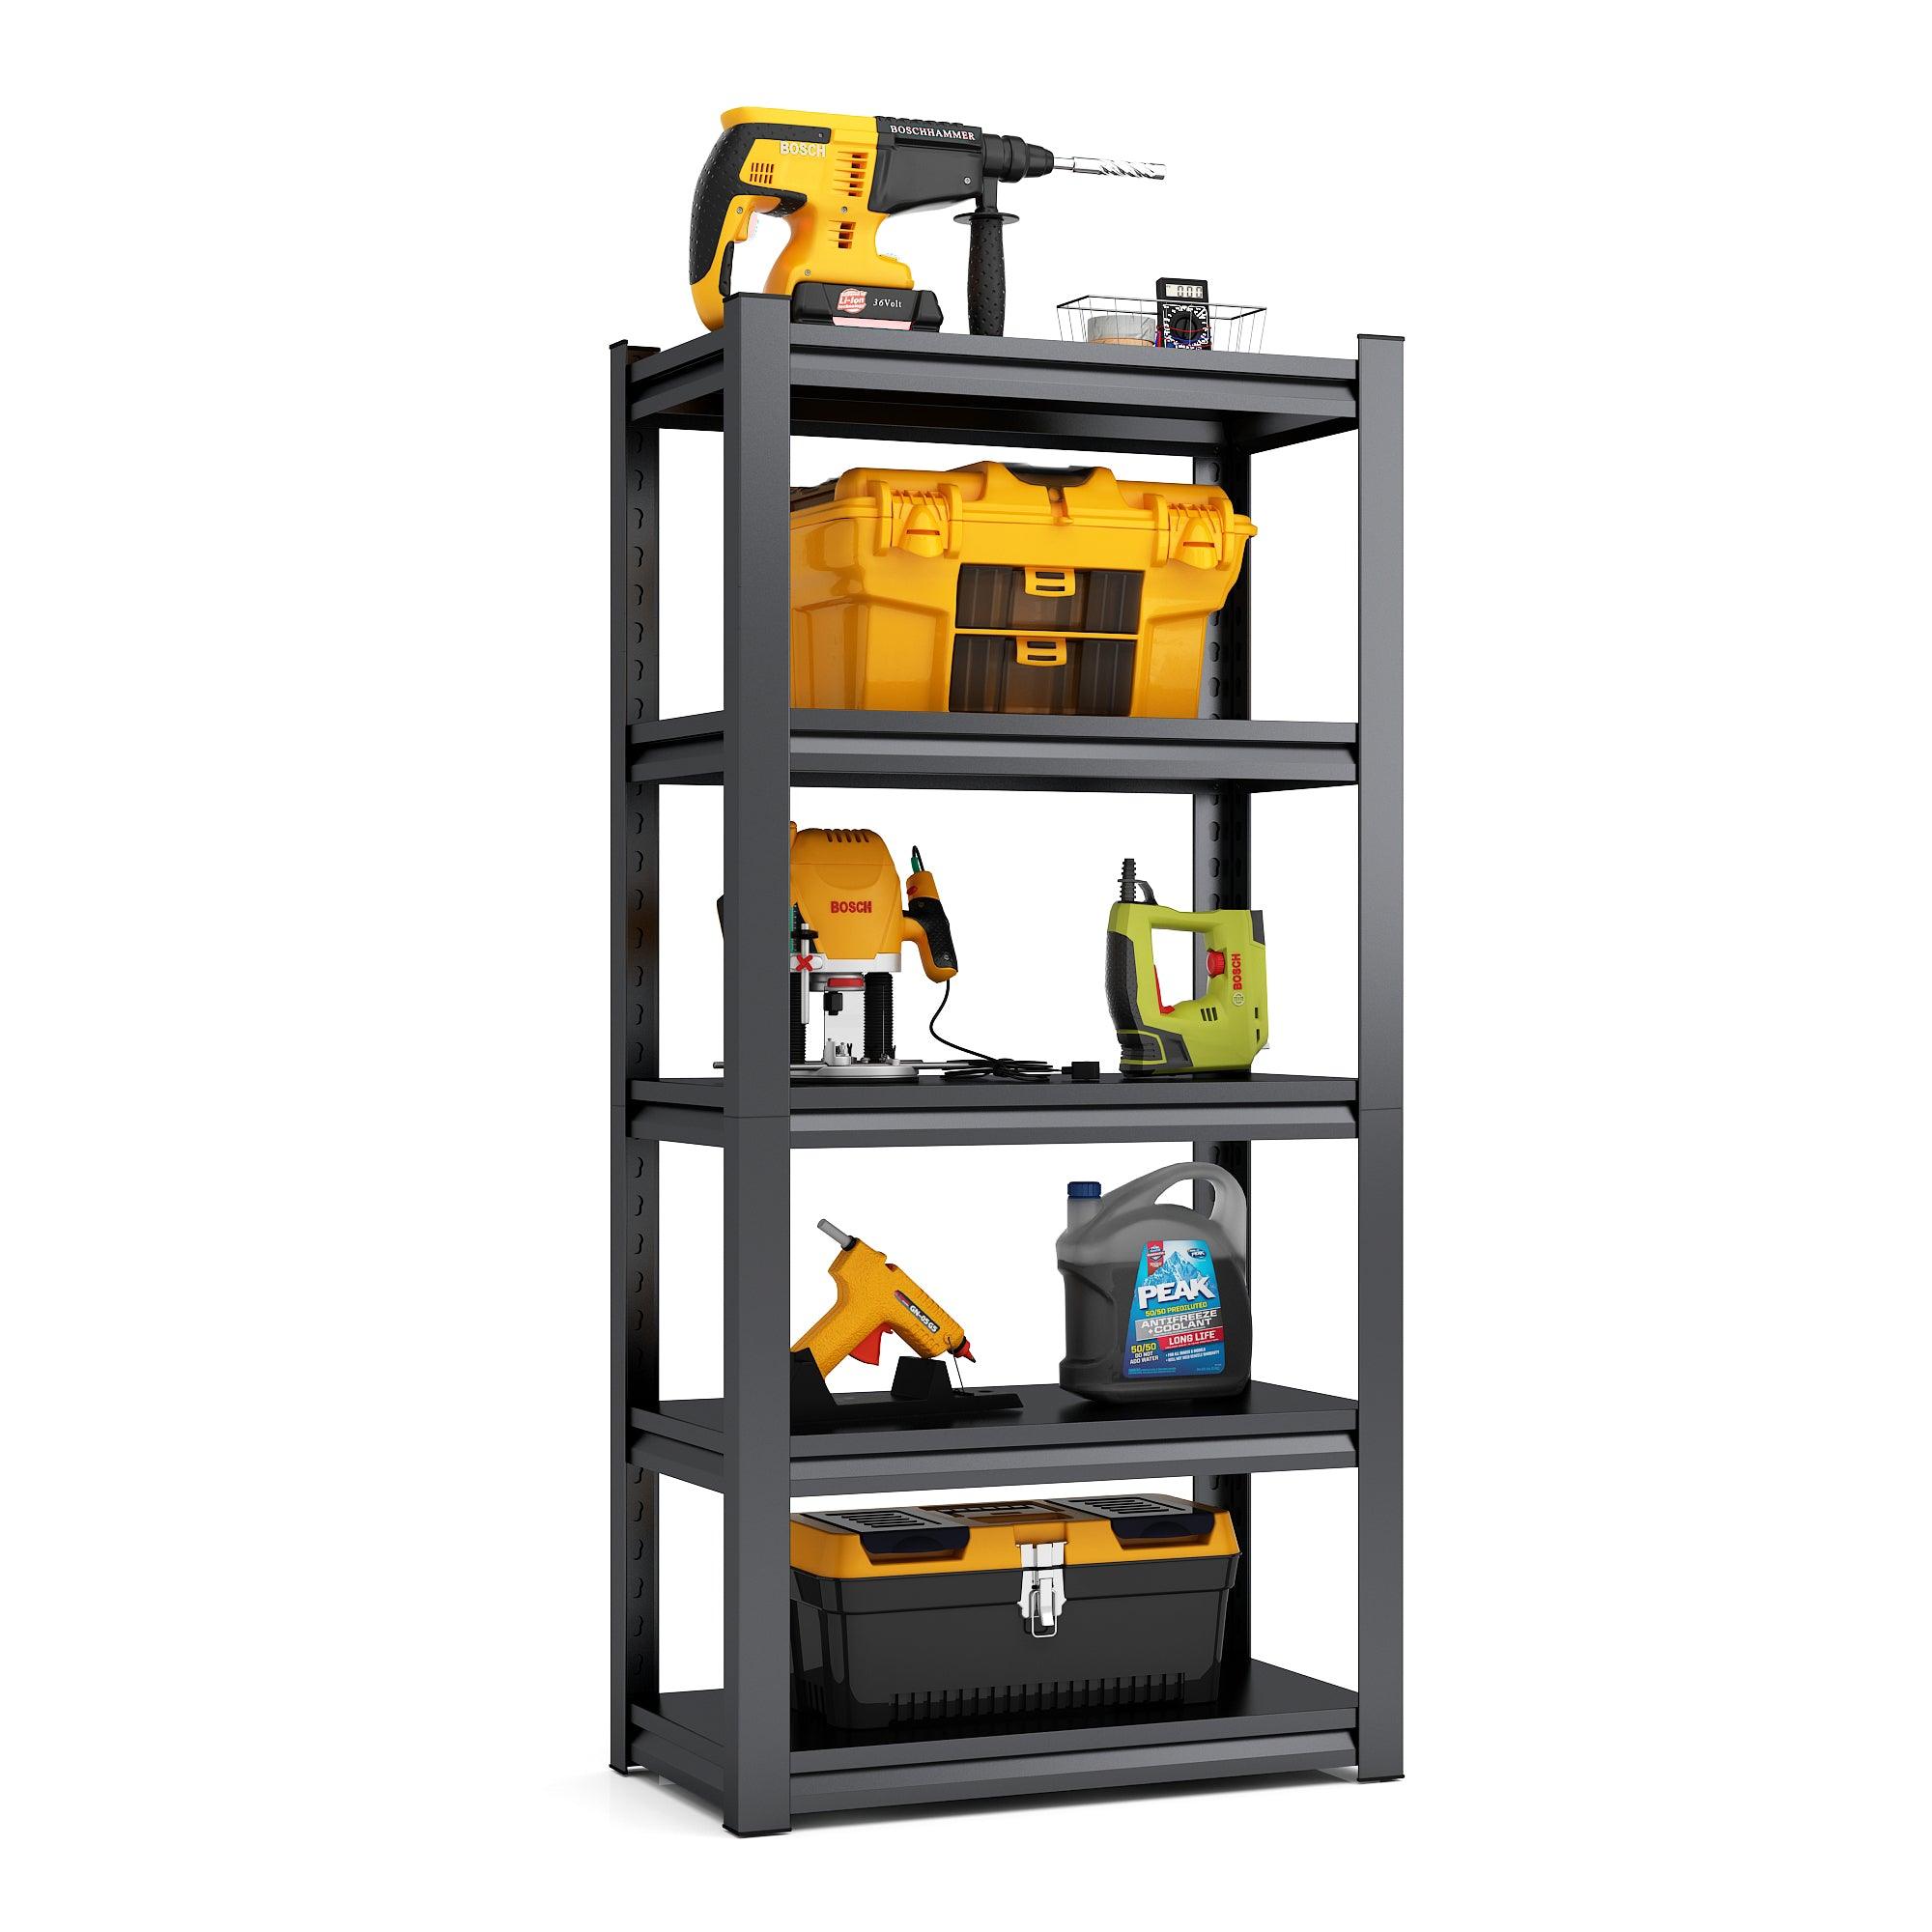 5 Tier Metal Shelving Unit for Garage Basement Kitchen Pantry Closet